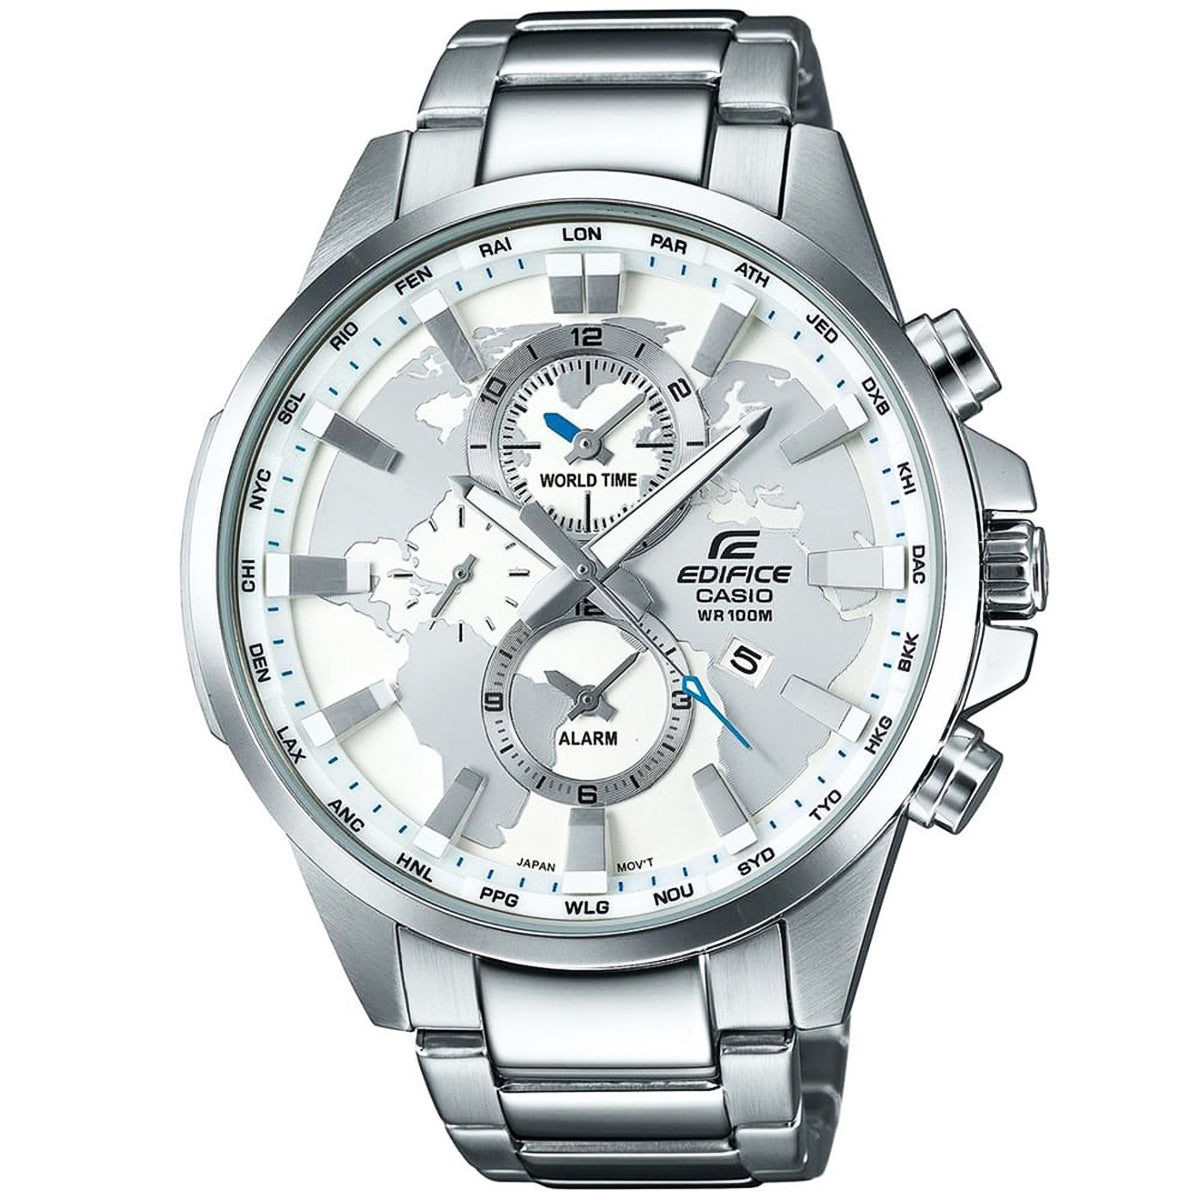 Casio Edifice white dial world time watch